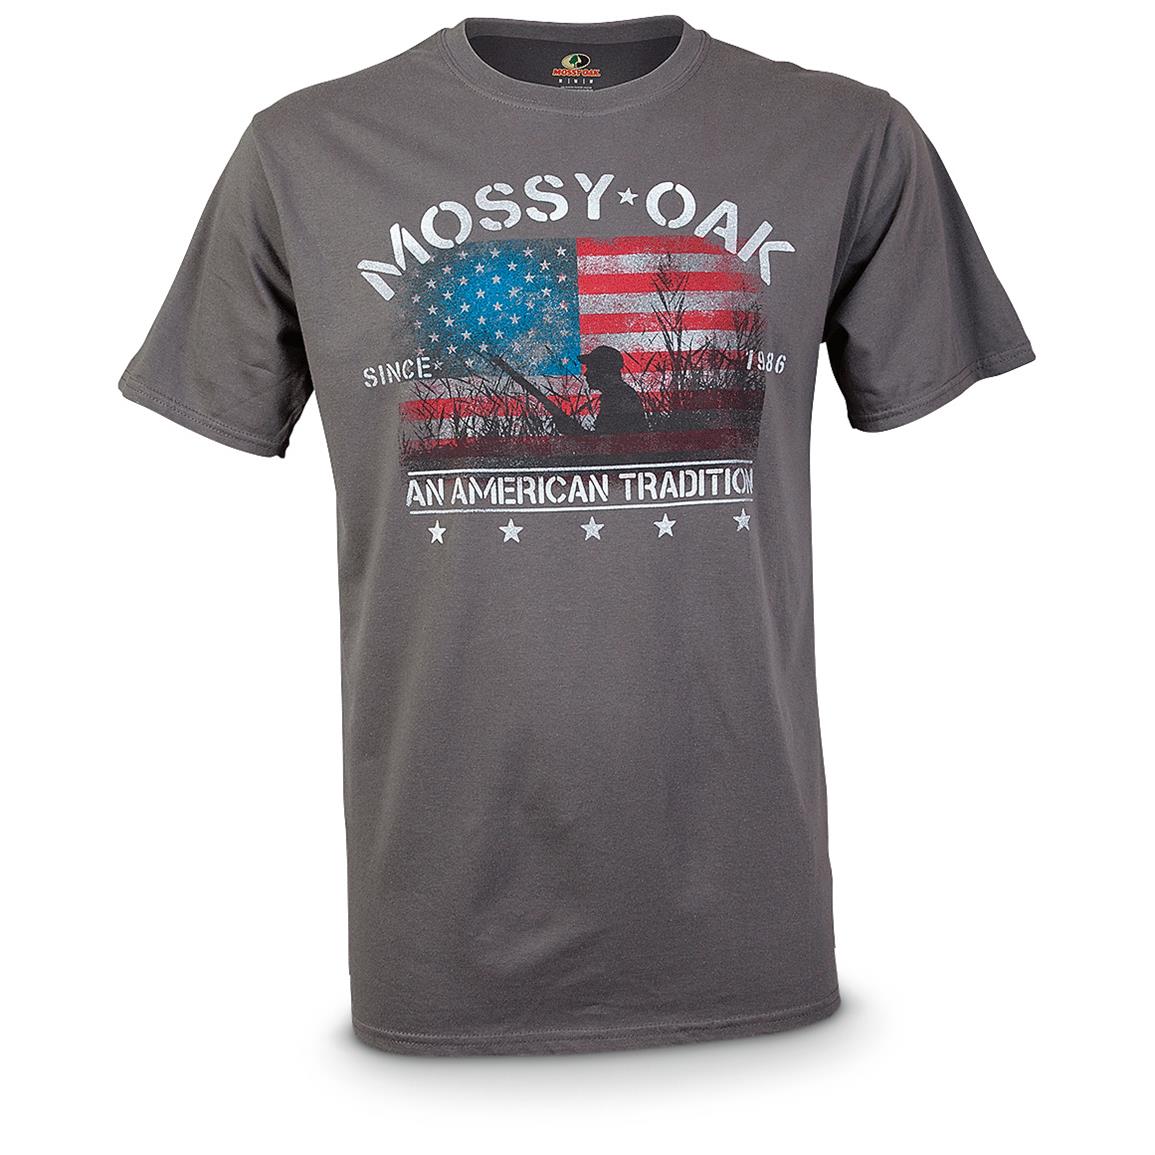 Mossy Oak Flag Logo Men's Tee - 668746, T-Shirts at Sportsman's Guide